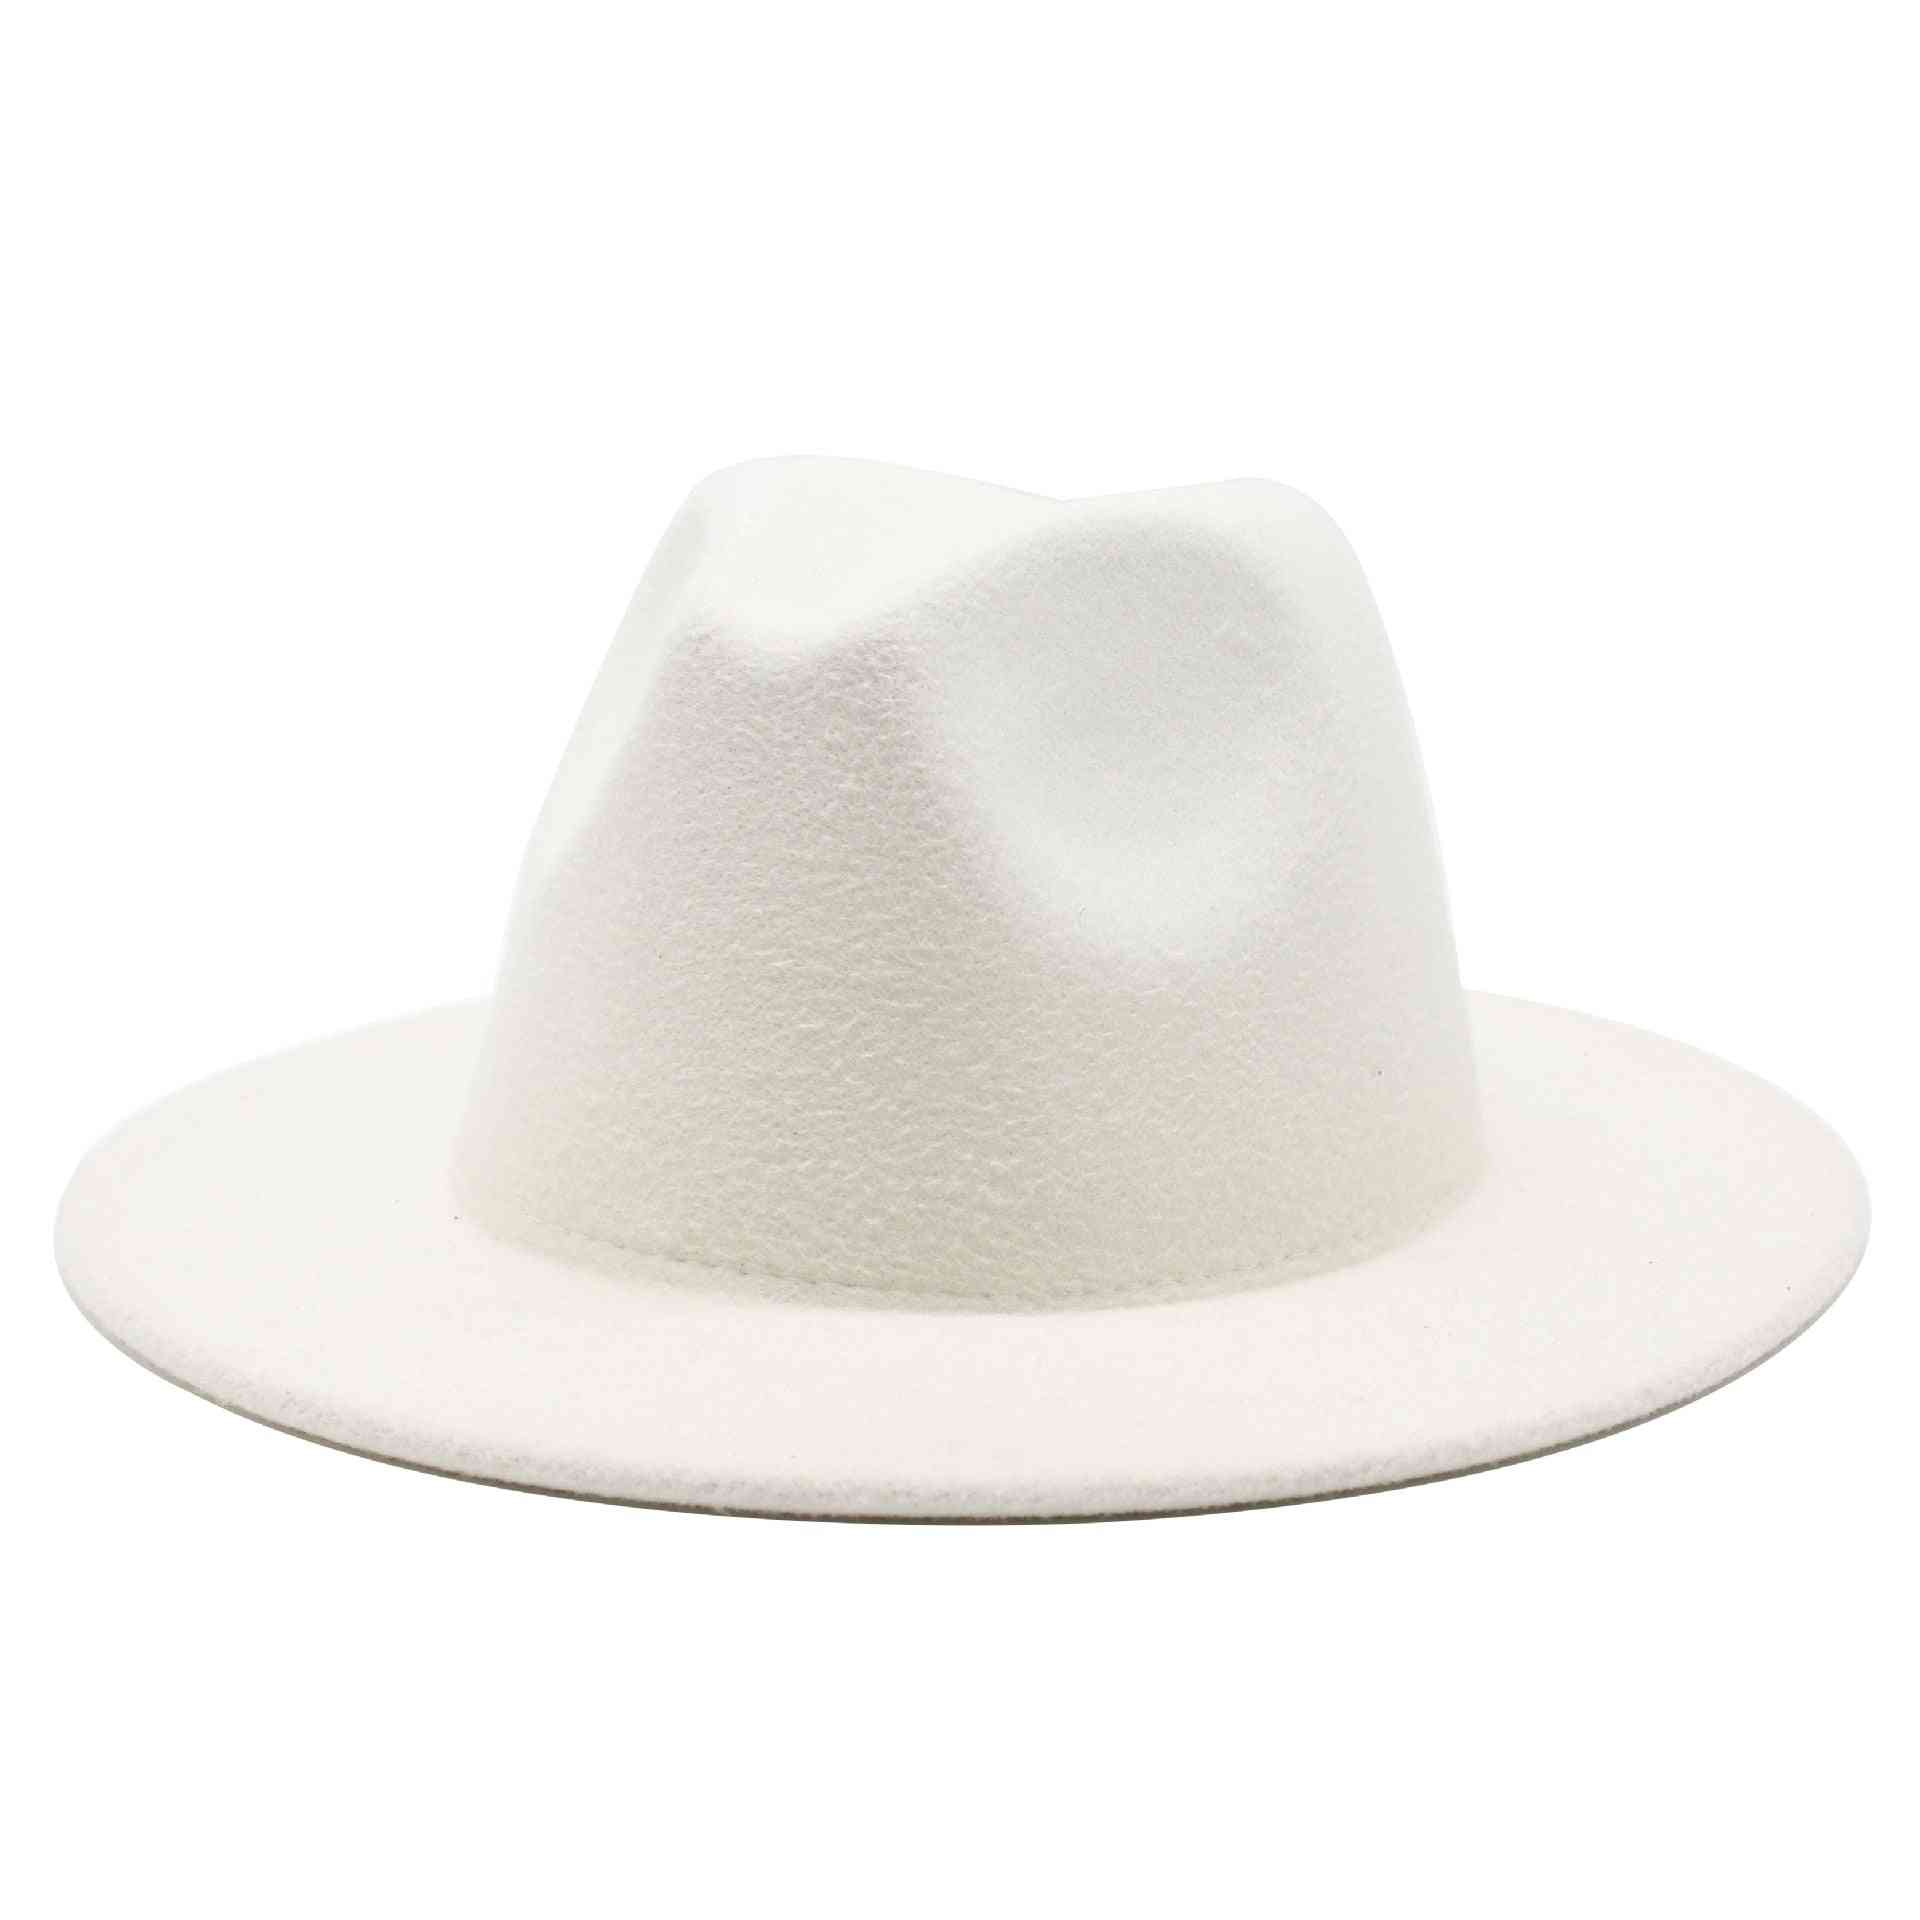 All-match Wide Brim Fedora Hat